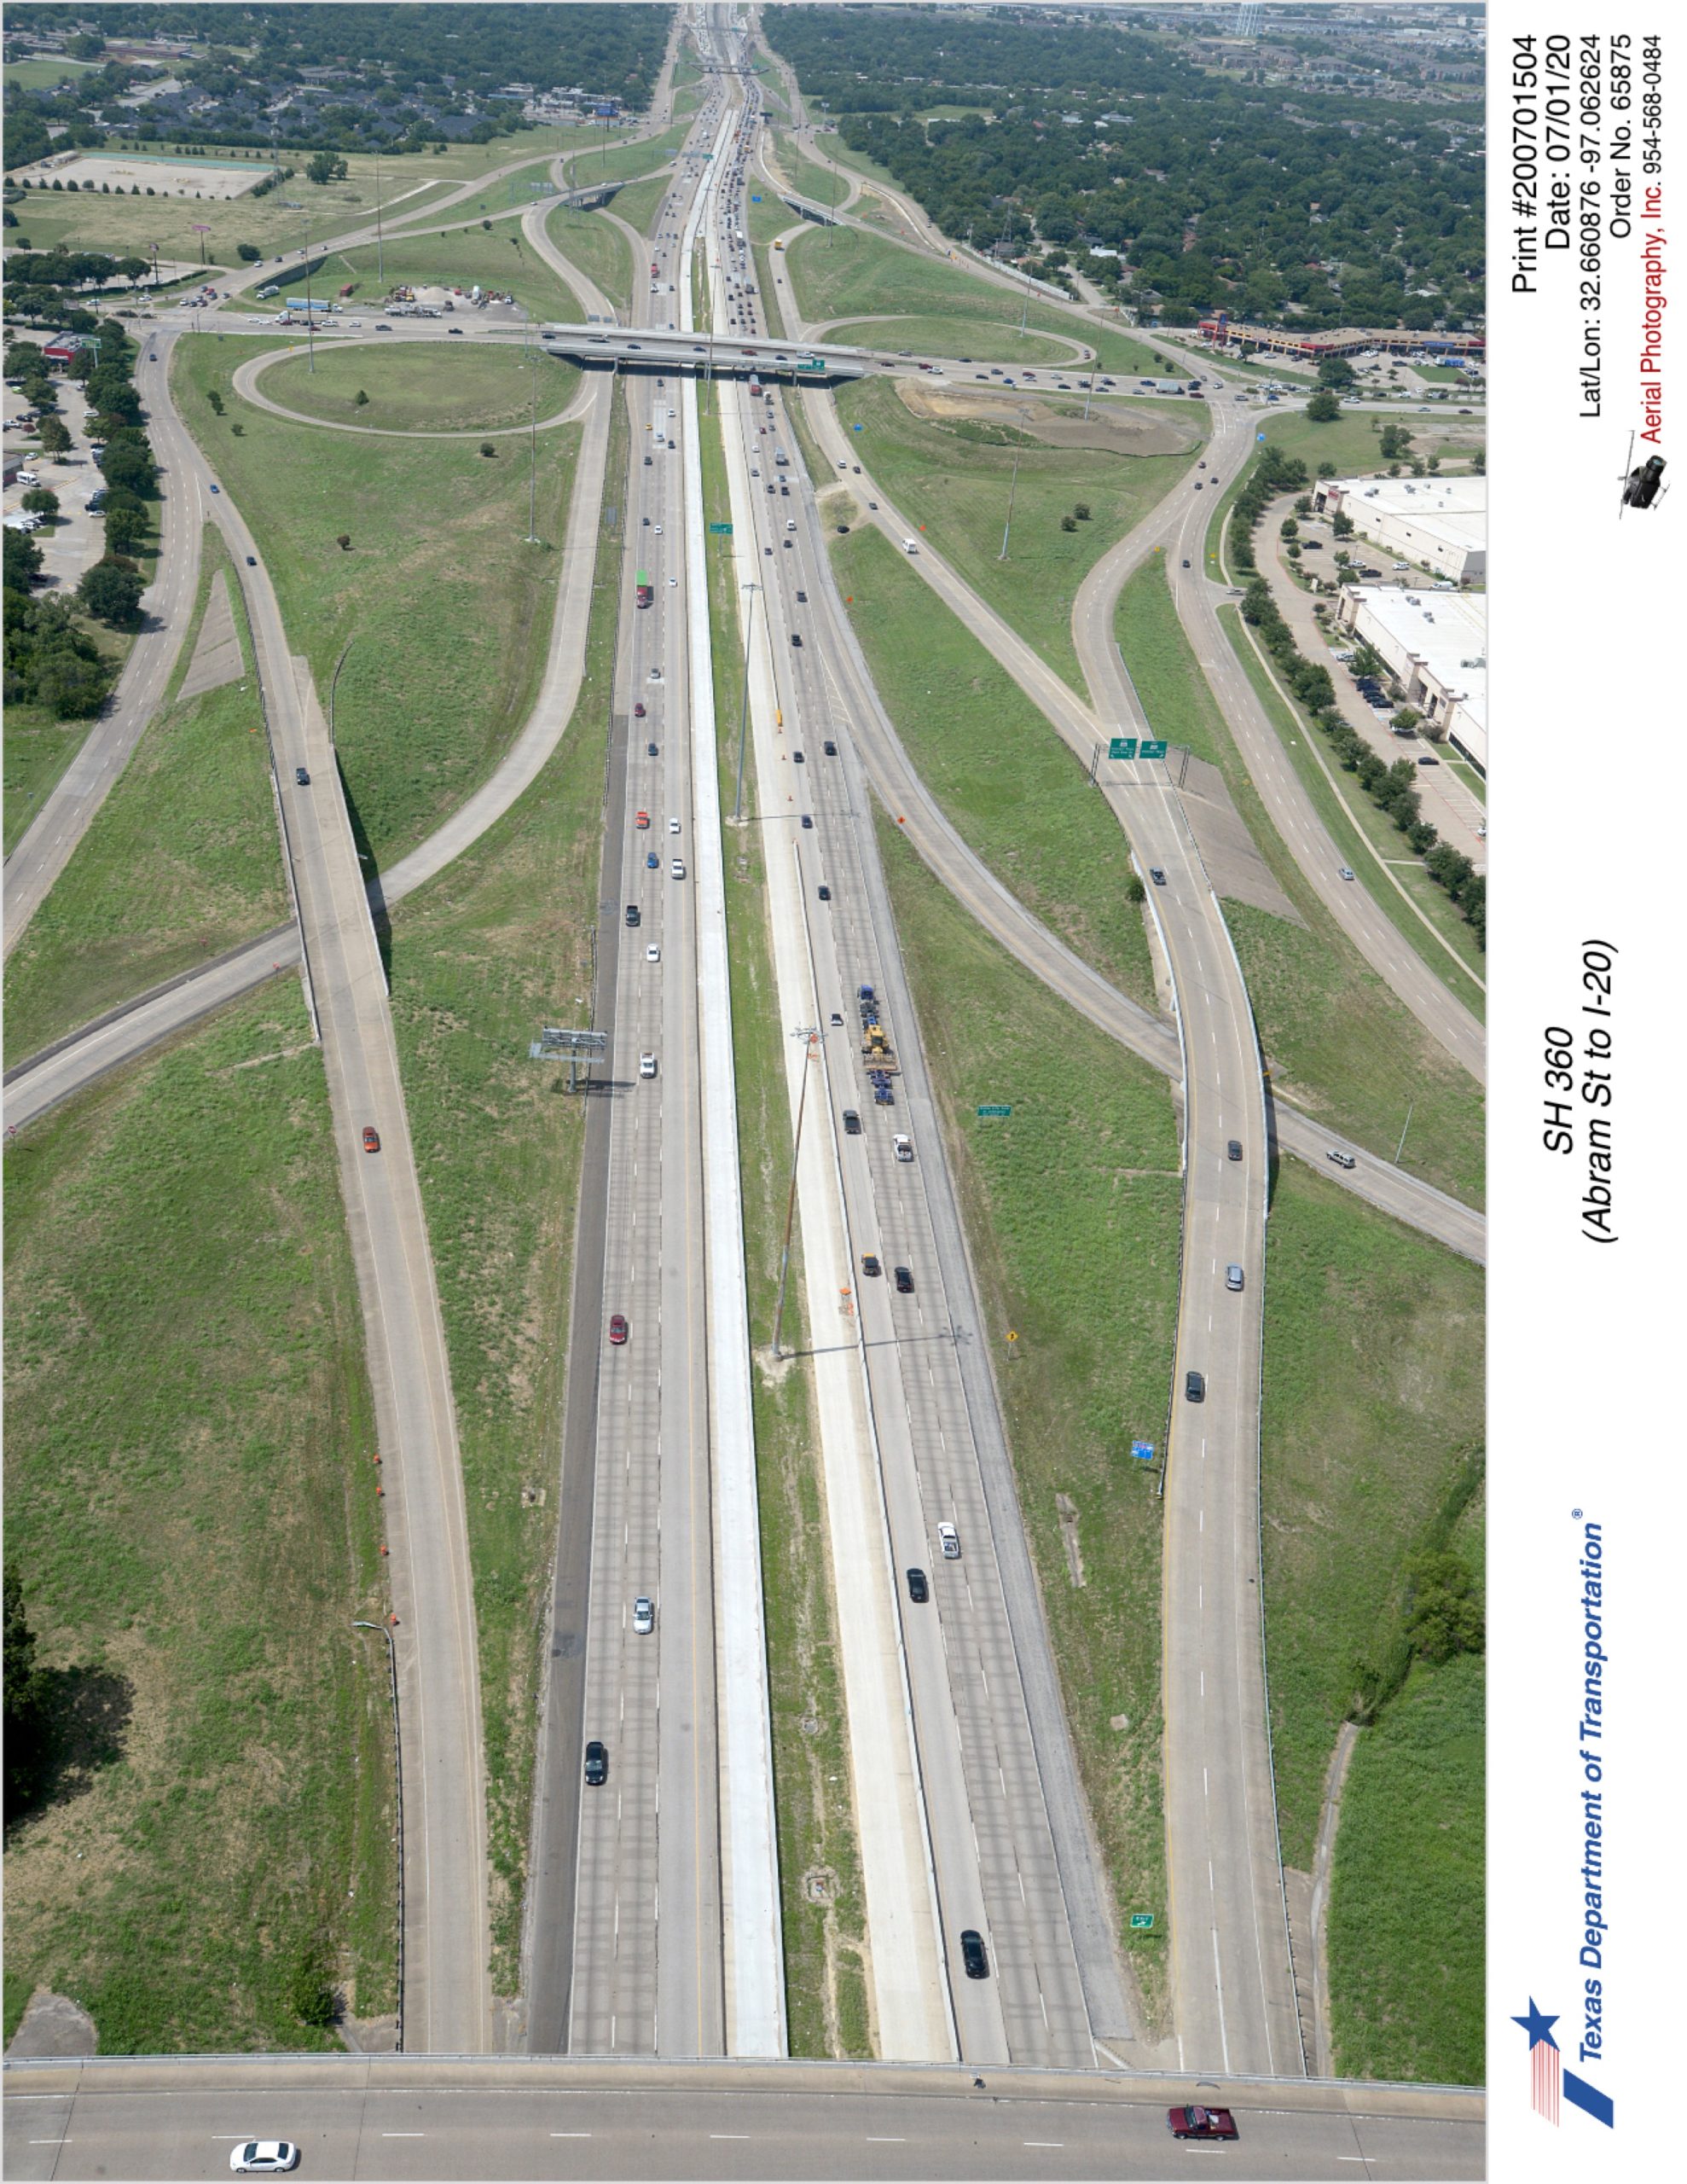 Looking north over SH 360/Arkansas Ln interchange. Interior widening shown.